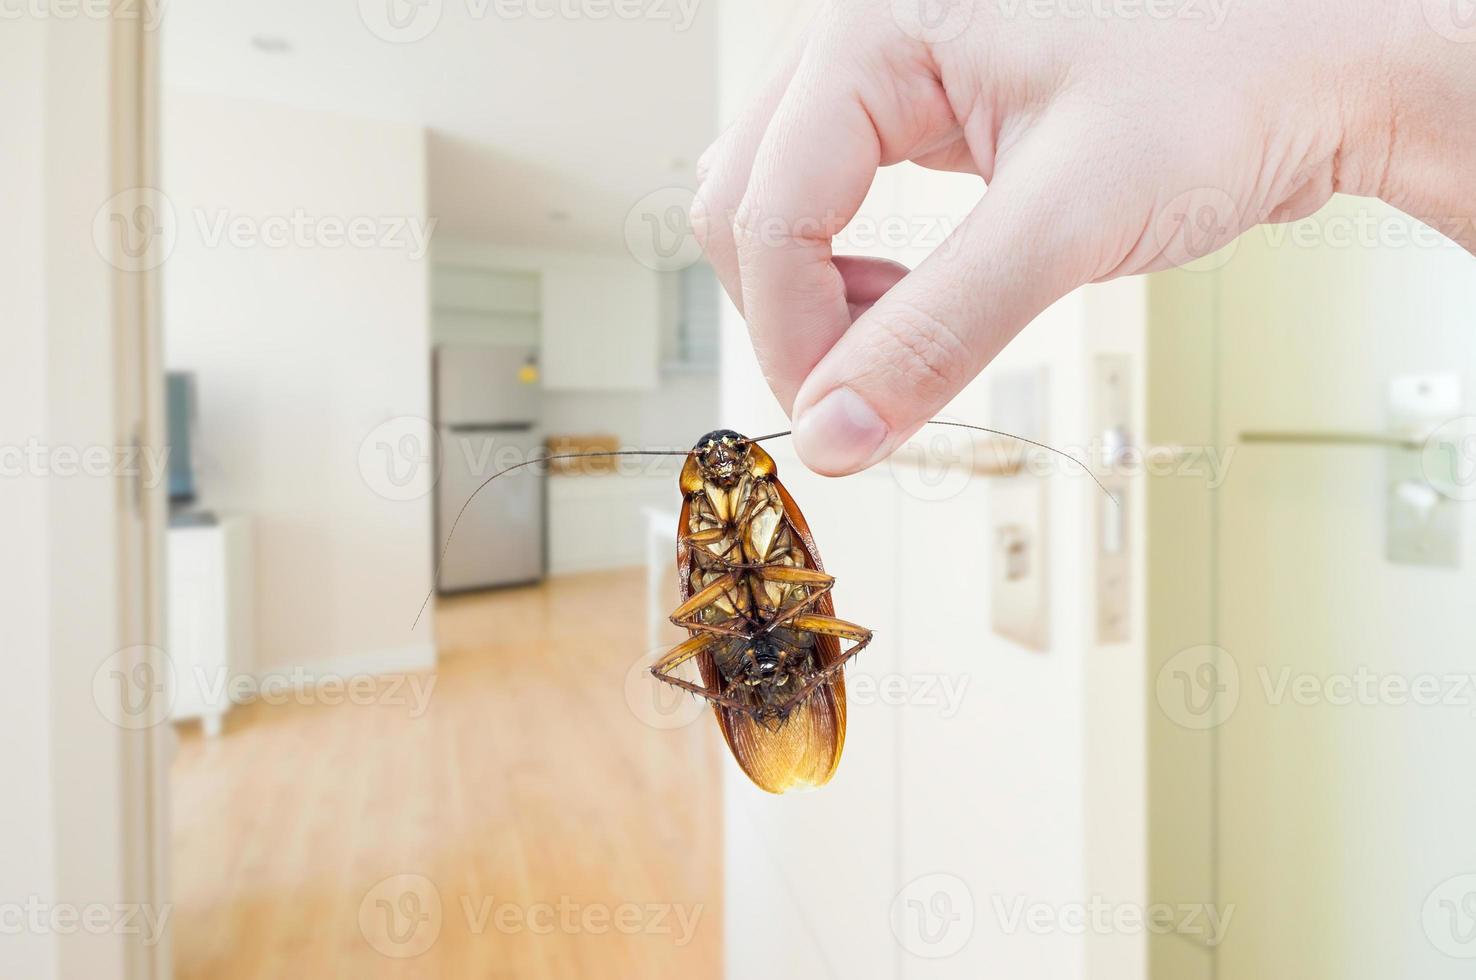 vrouw hand- Holding kakkerlak Aan kamer in huis achtergrond, elimineren kakkerlak in kamer huis foto